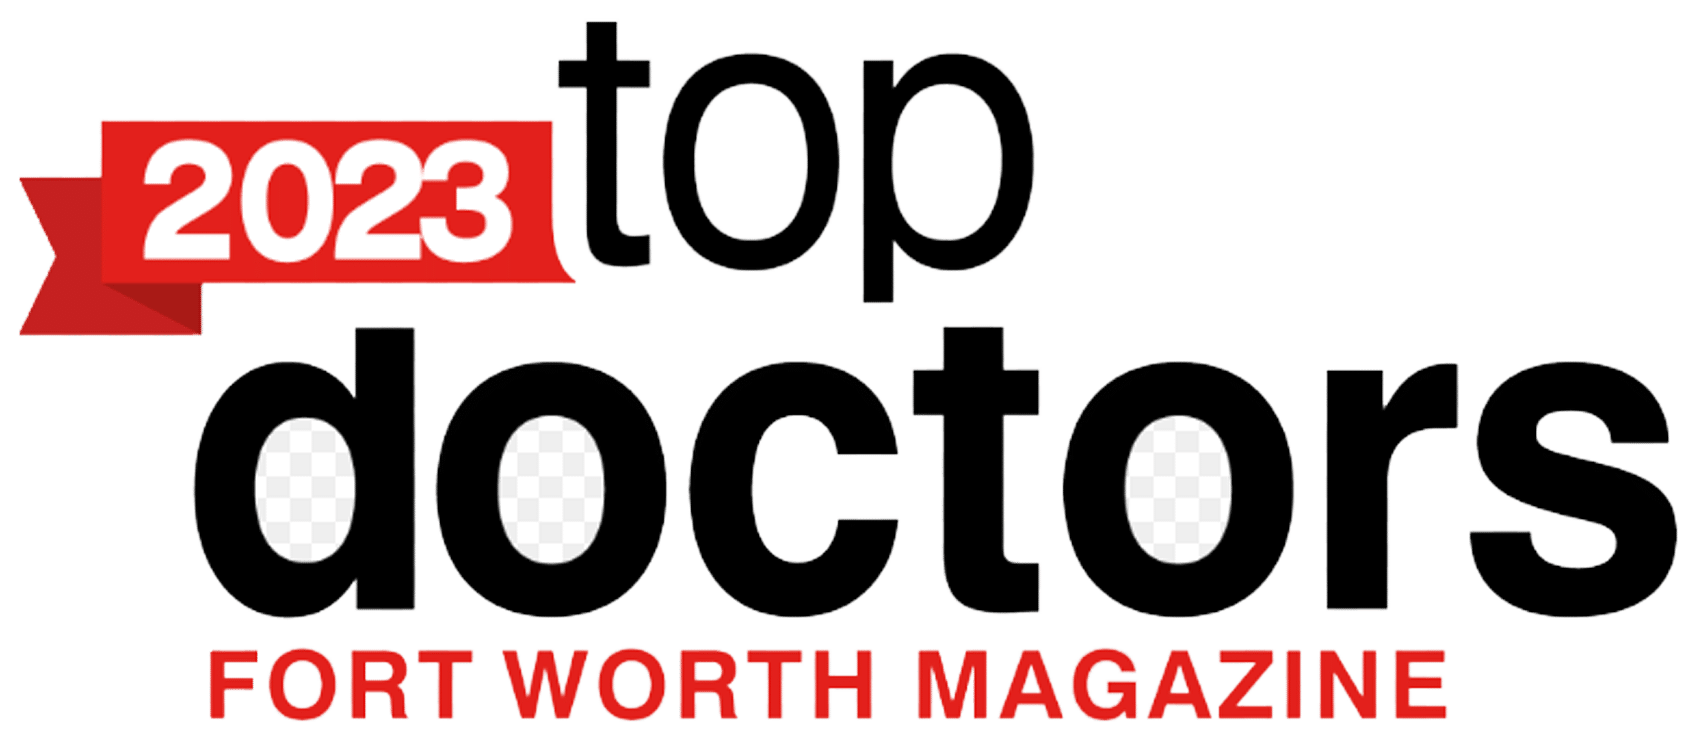 Fort Worth Magazine Top Doctors 2023 logo